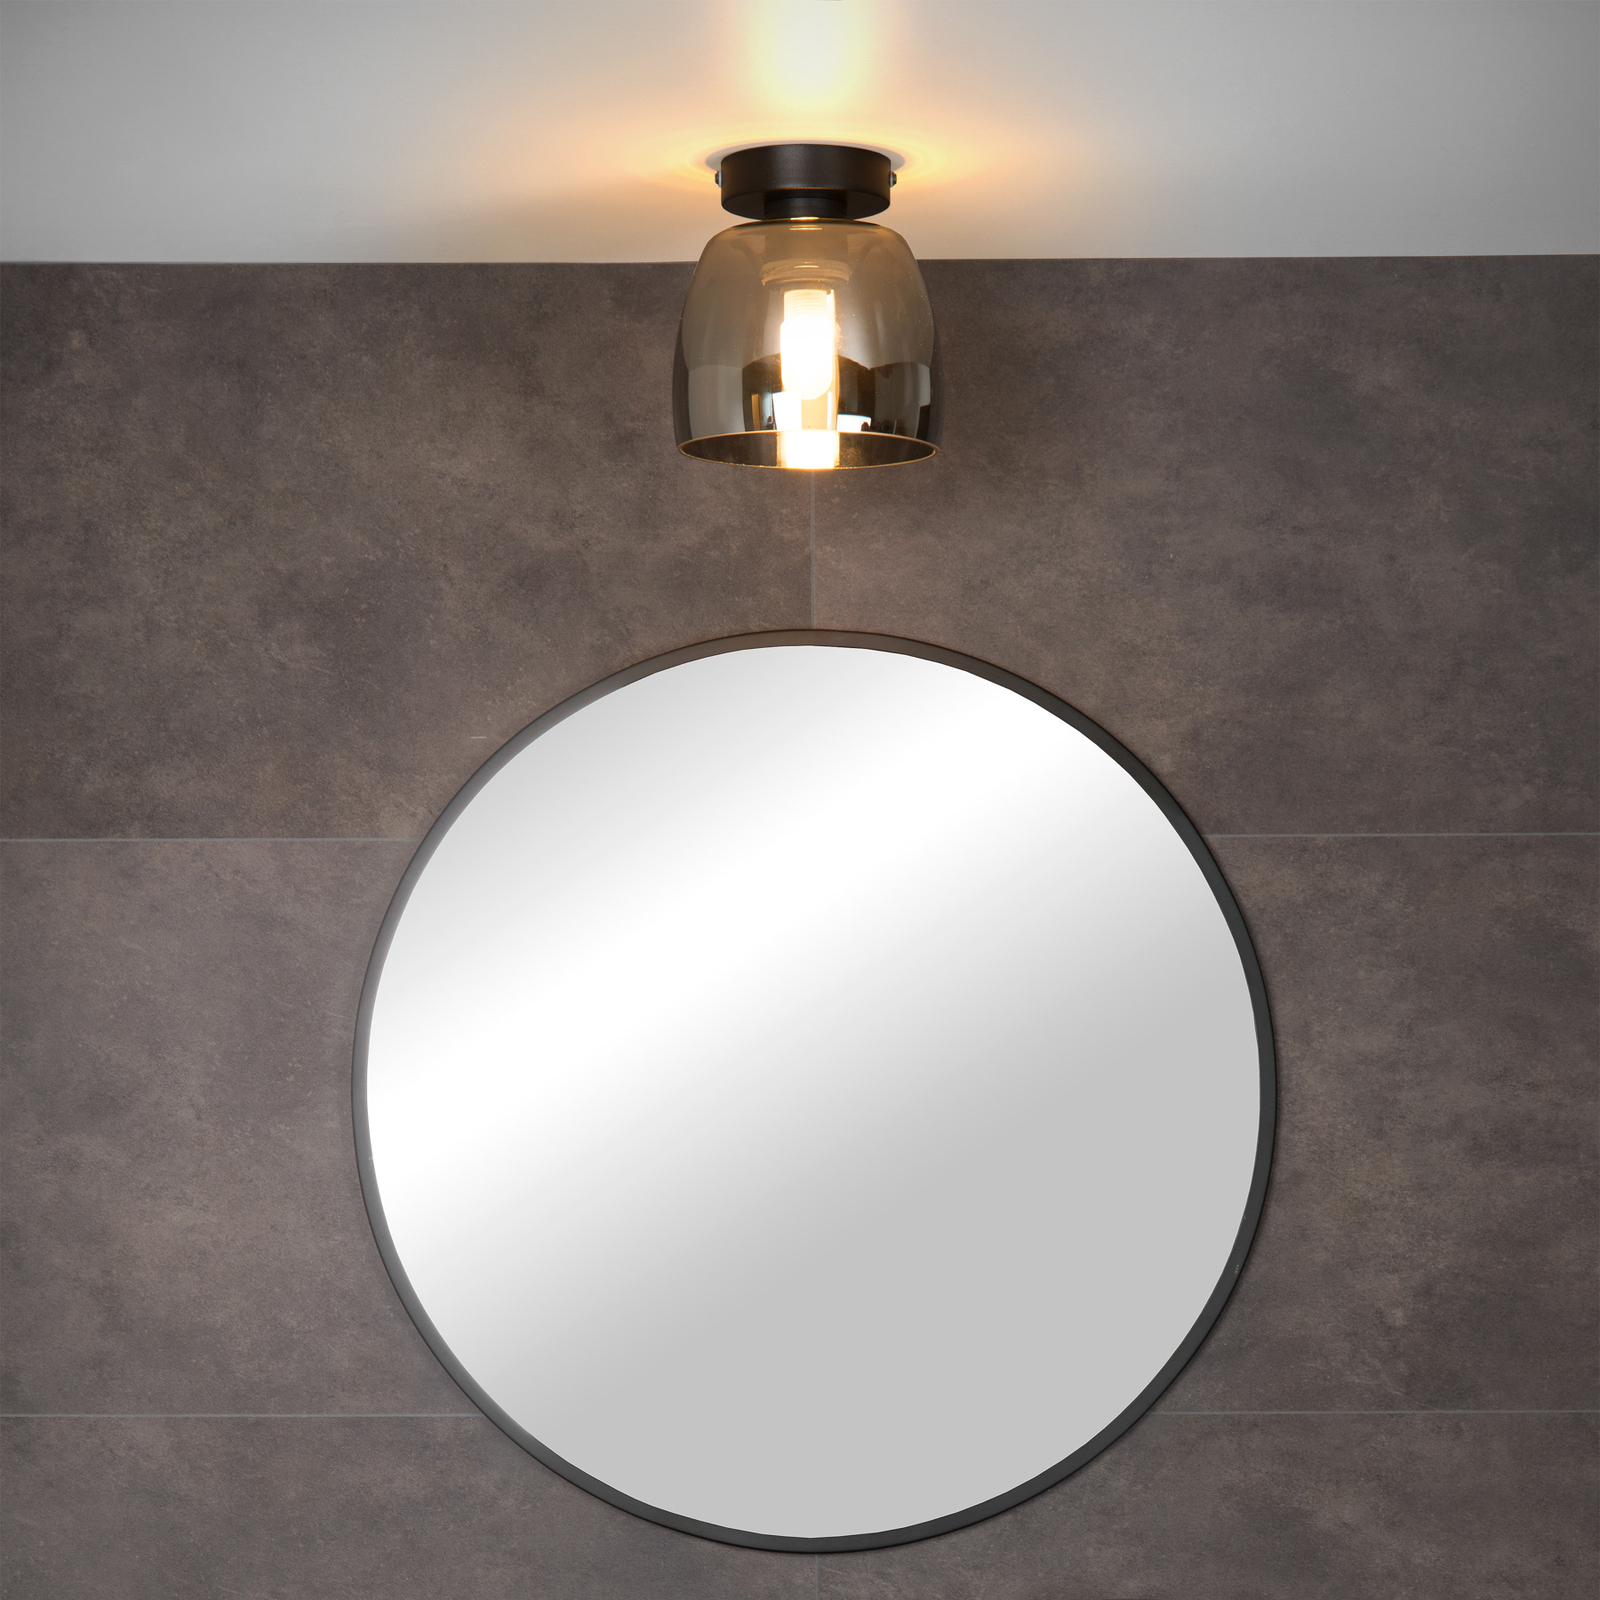 Tyler bathroom ceiling light, black/smoke grey